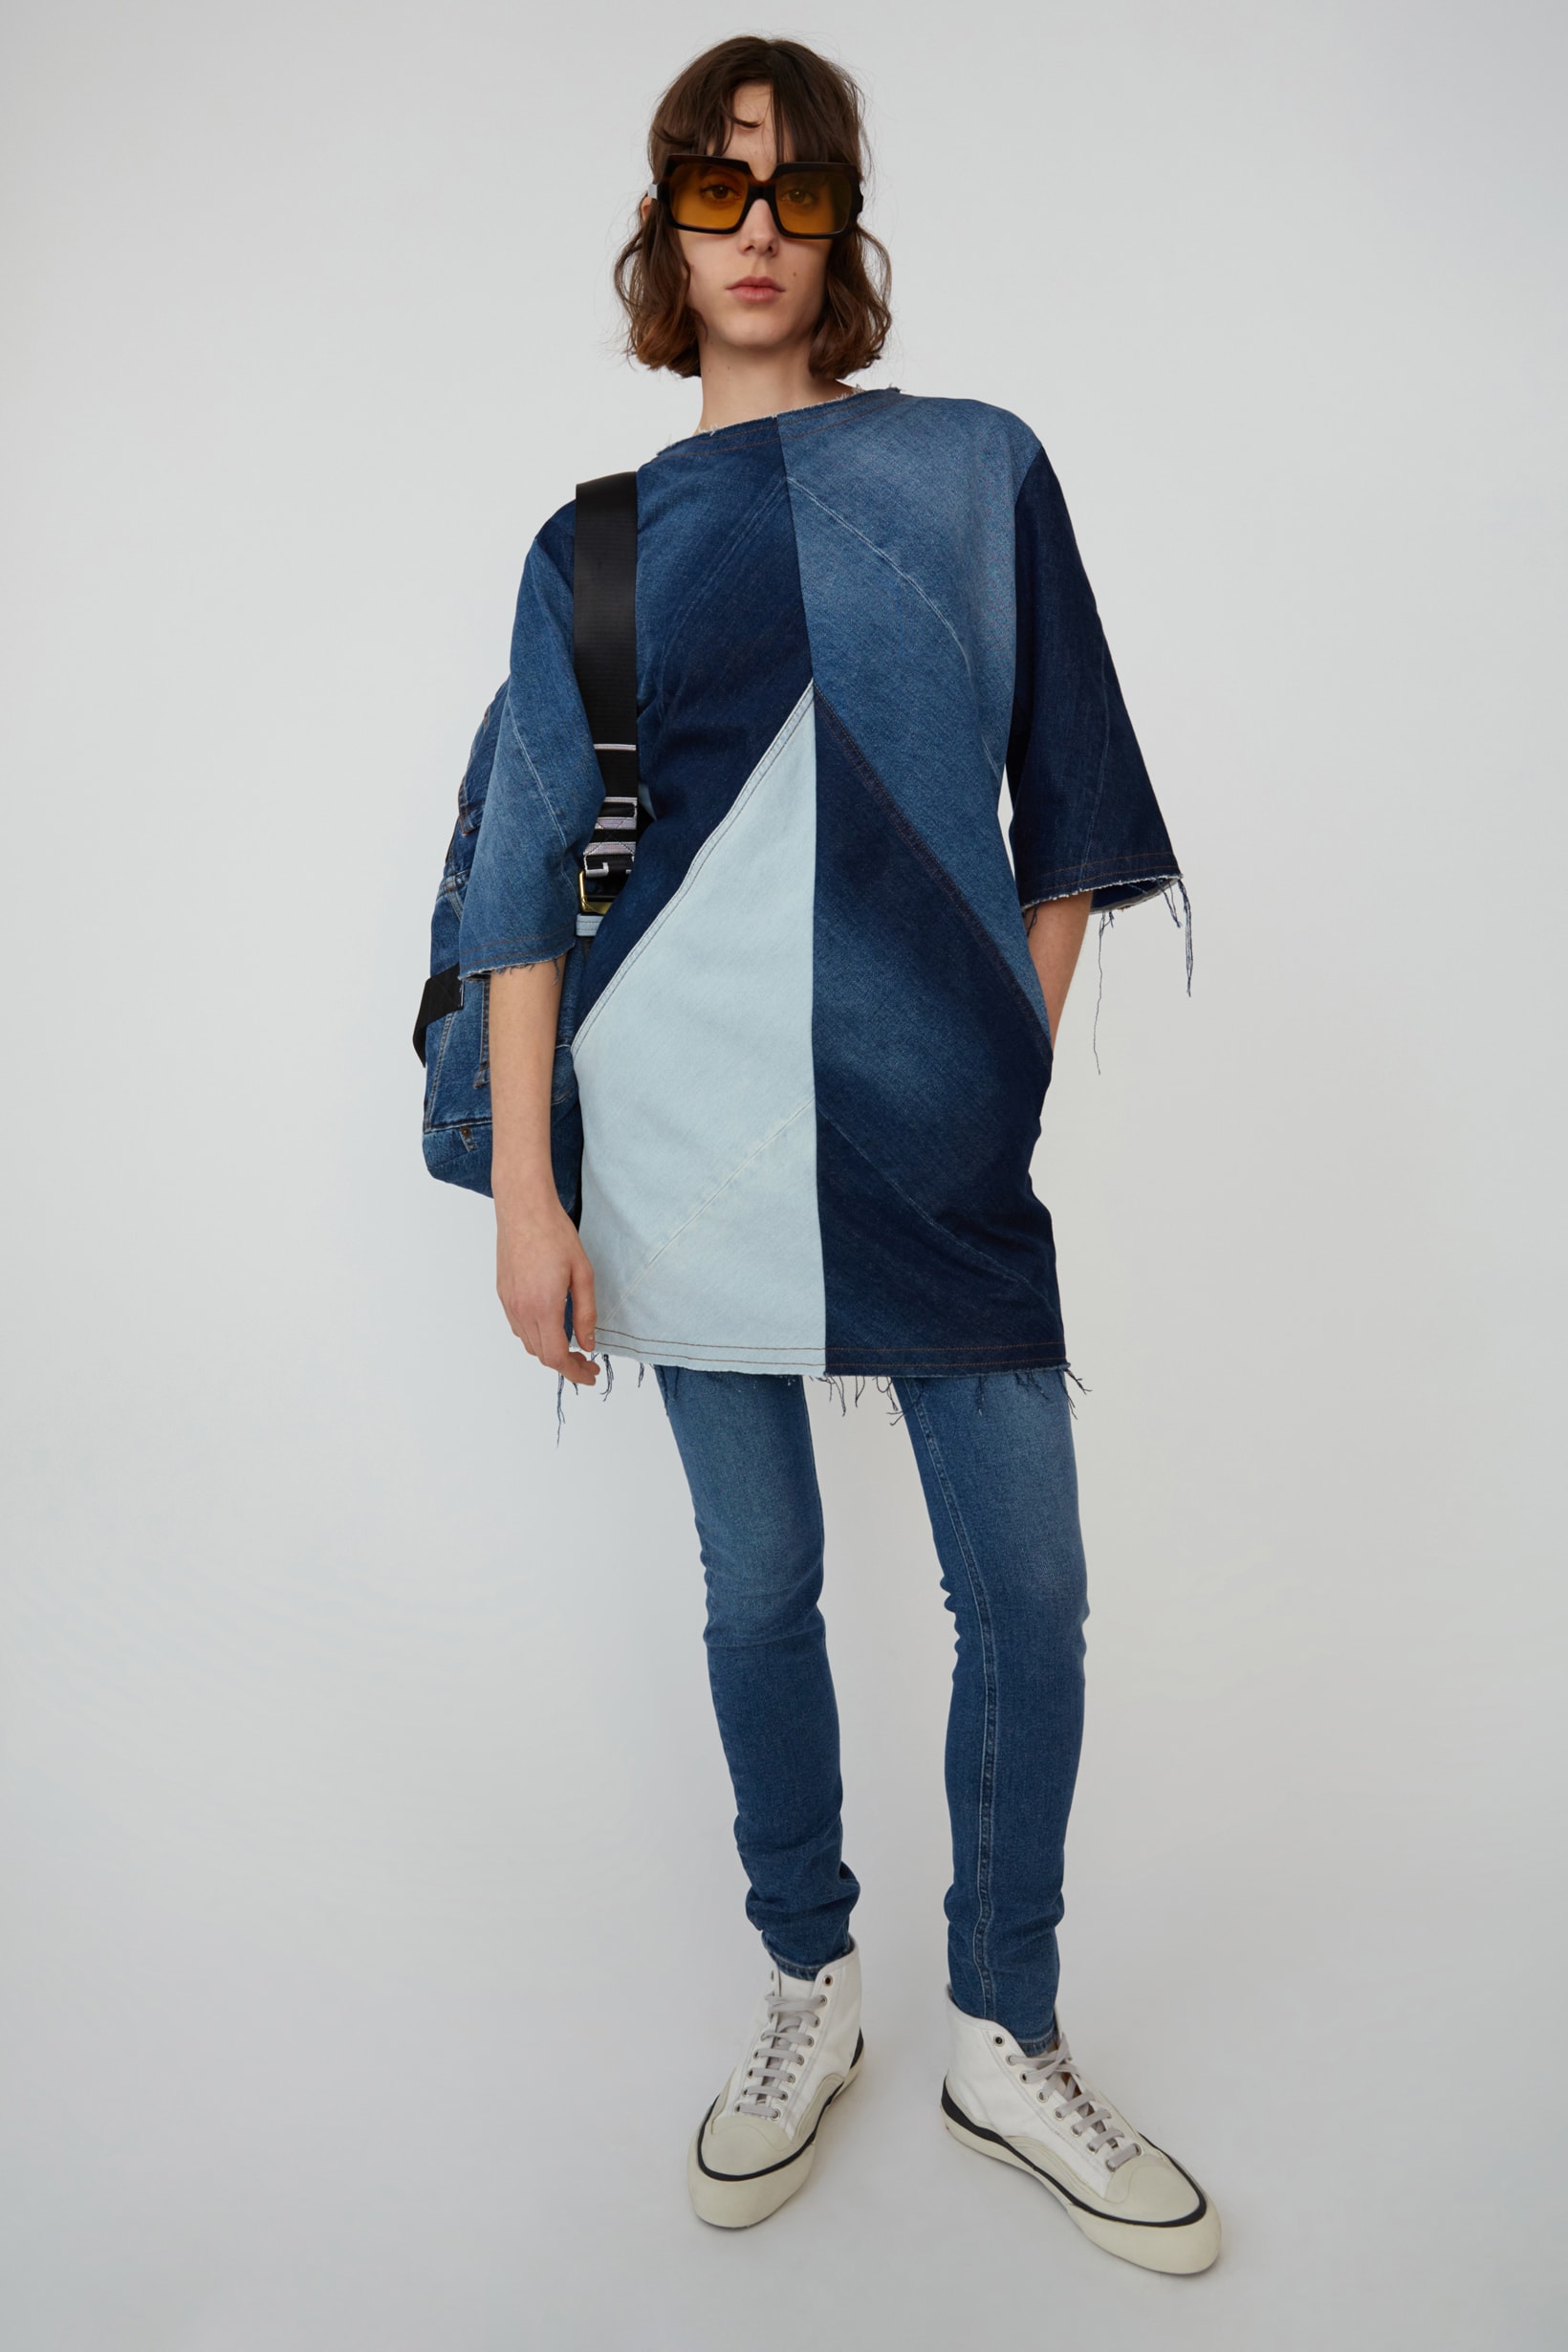 Acne Studios Spring Summer 2019 Denim Collection T-shirt Dress Jeans Blue